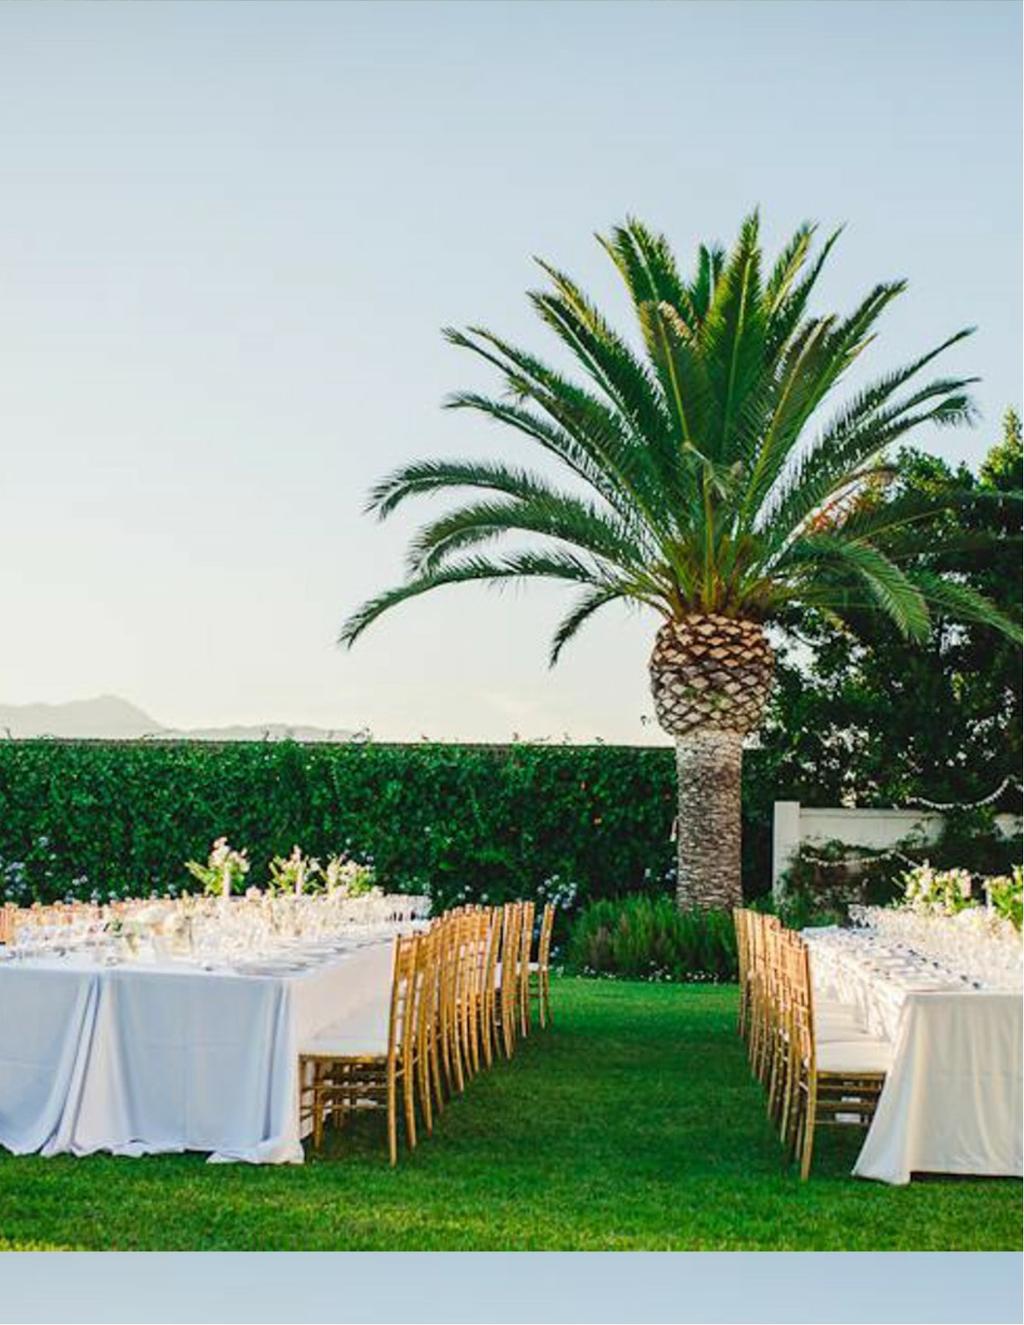 Villa weddings and private locations